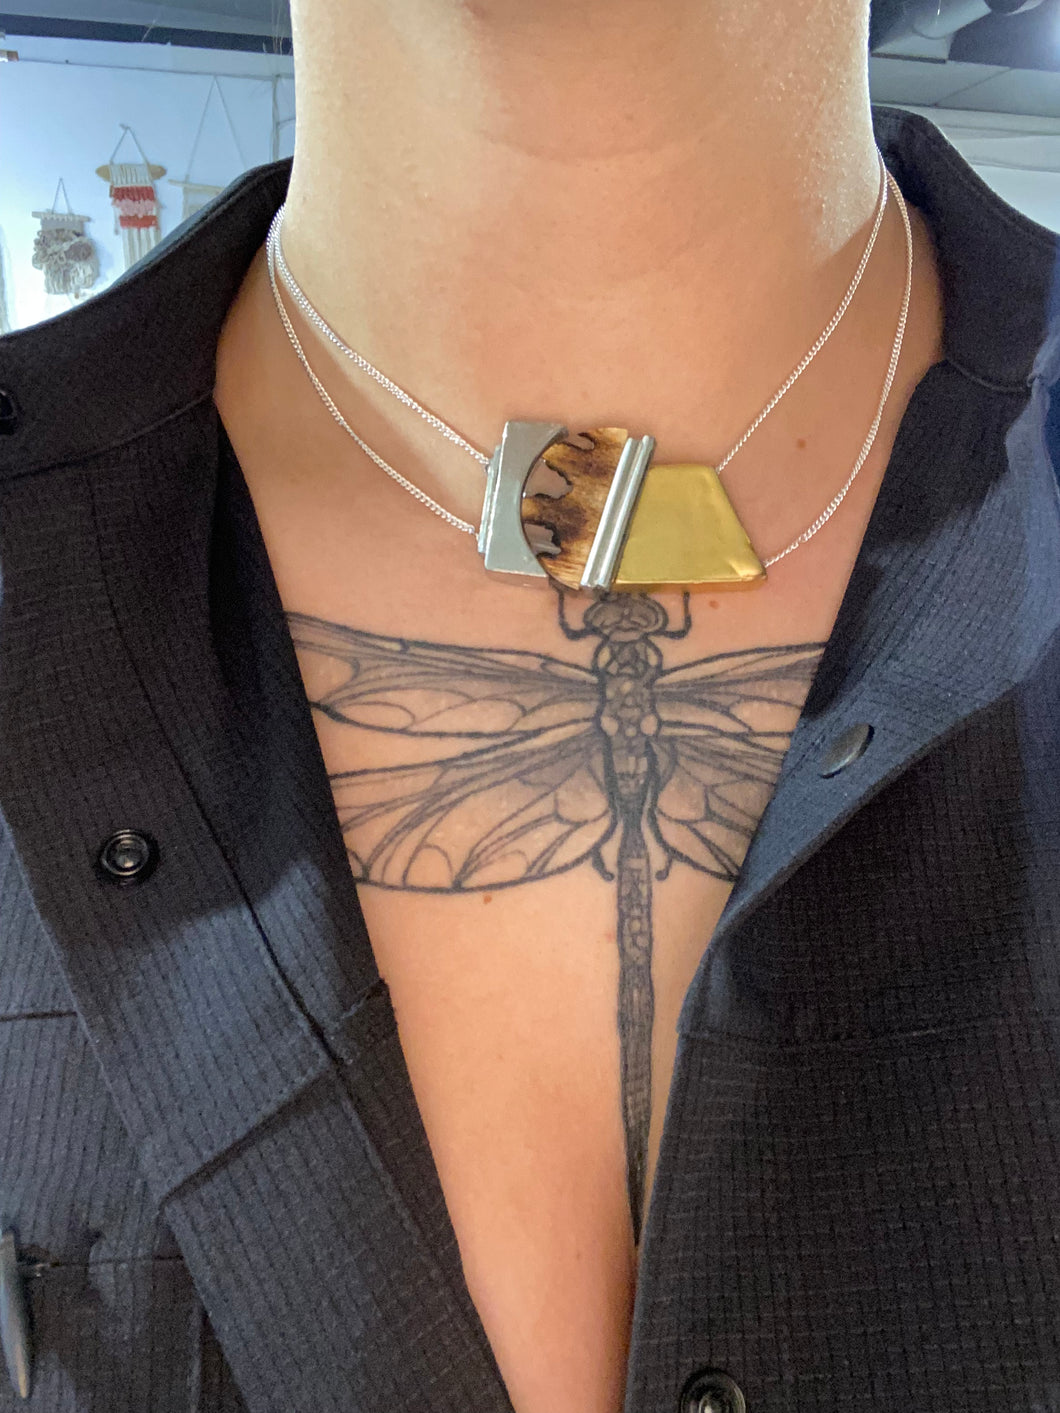 Janelle necklace